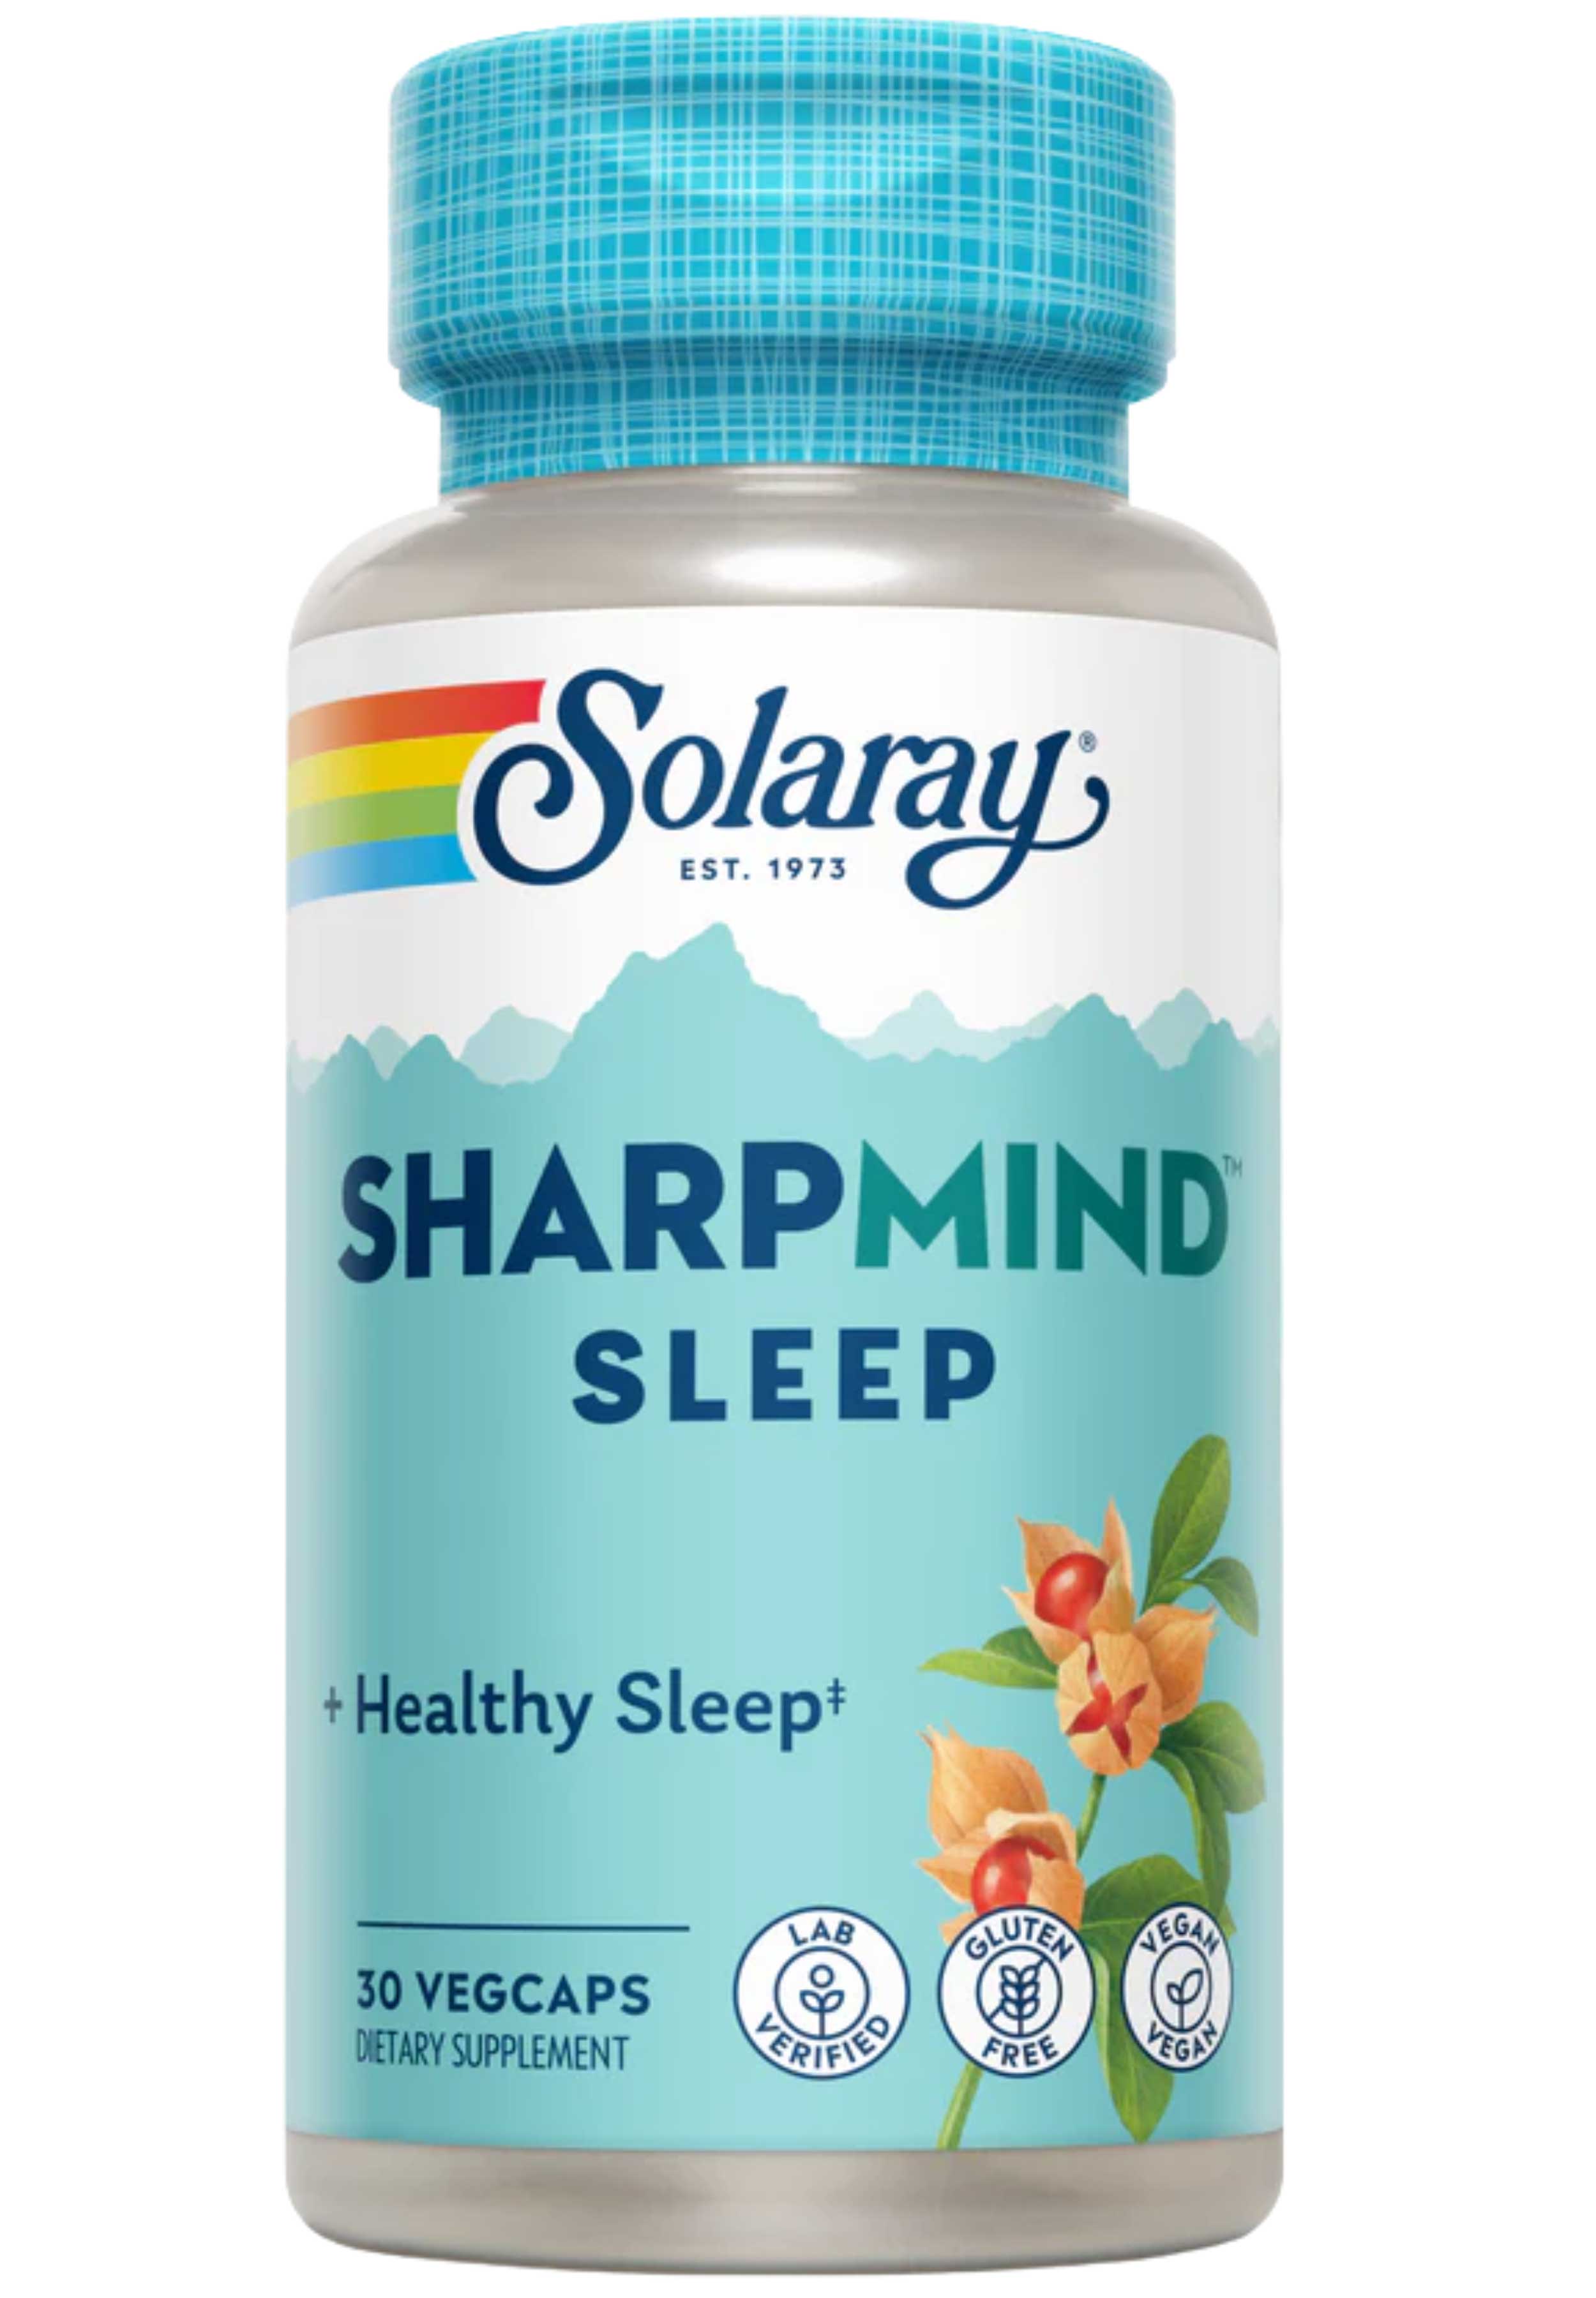 Solaray SharpMind Sleep